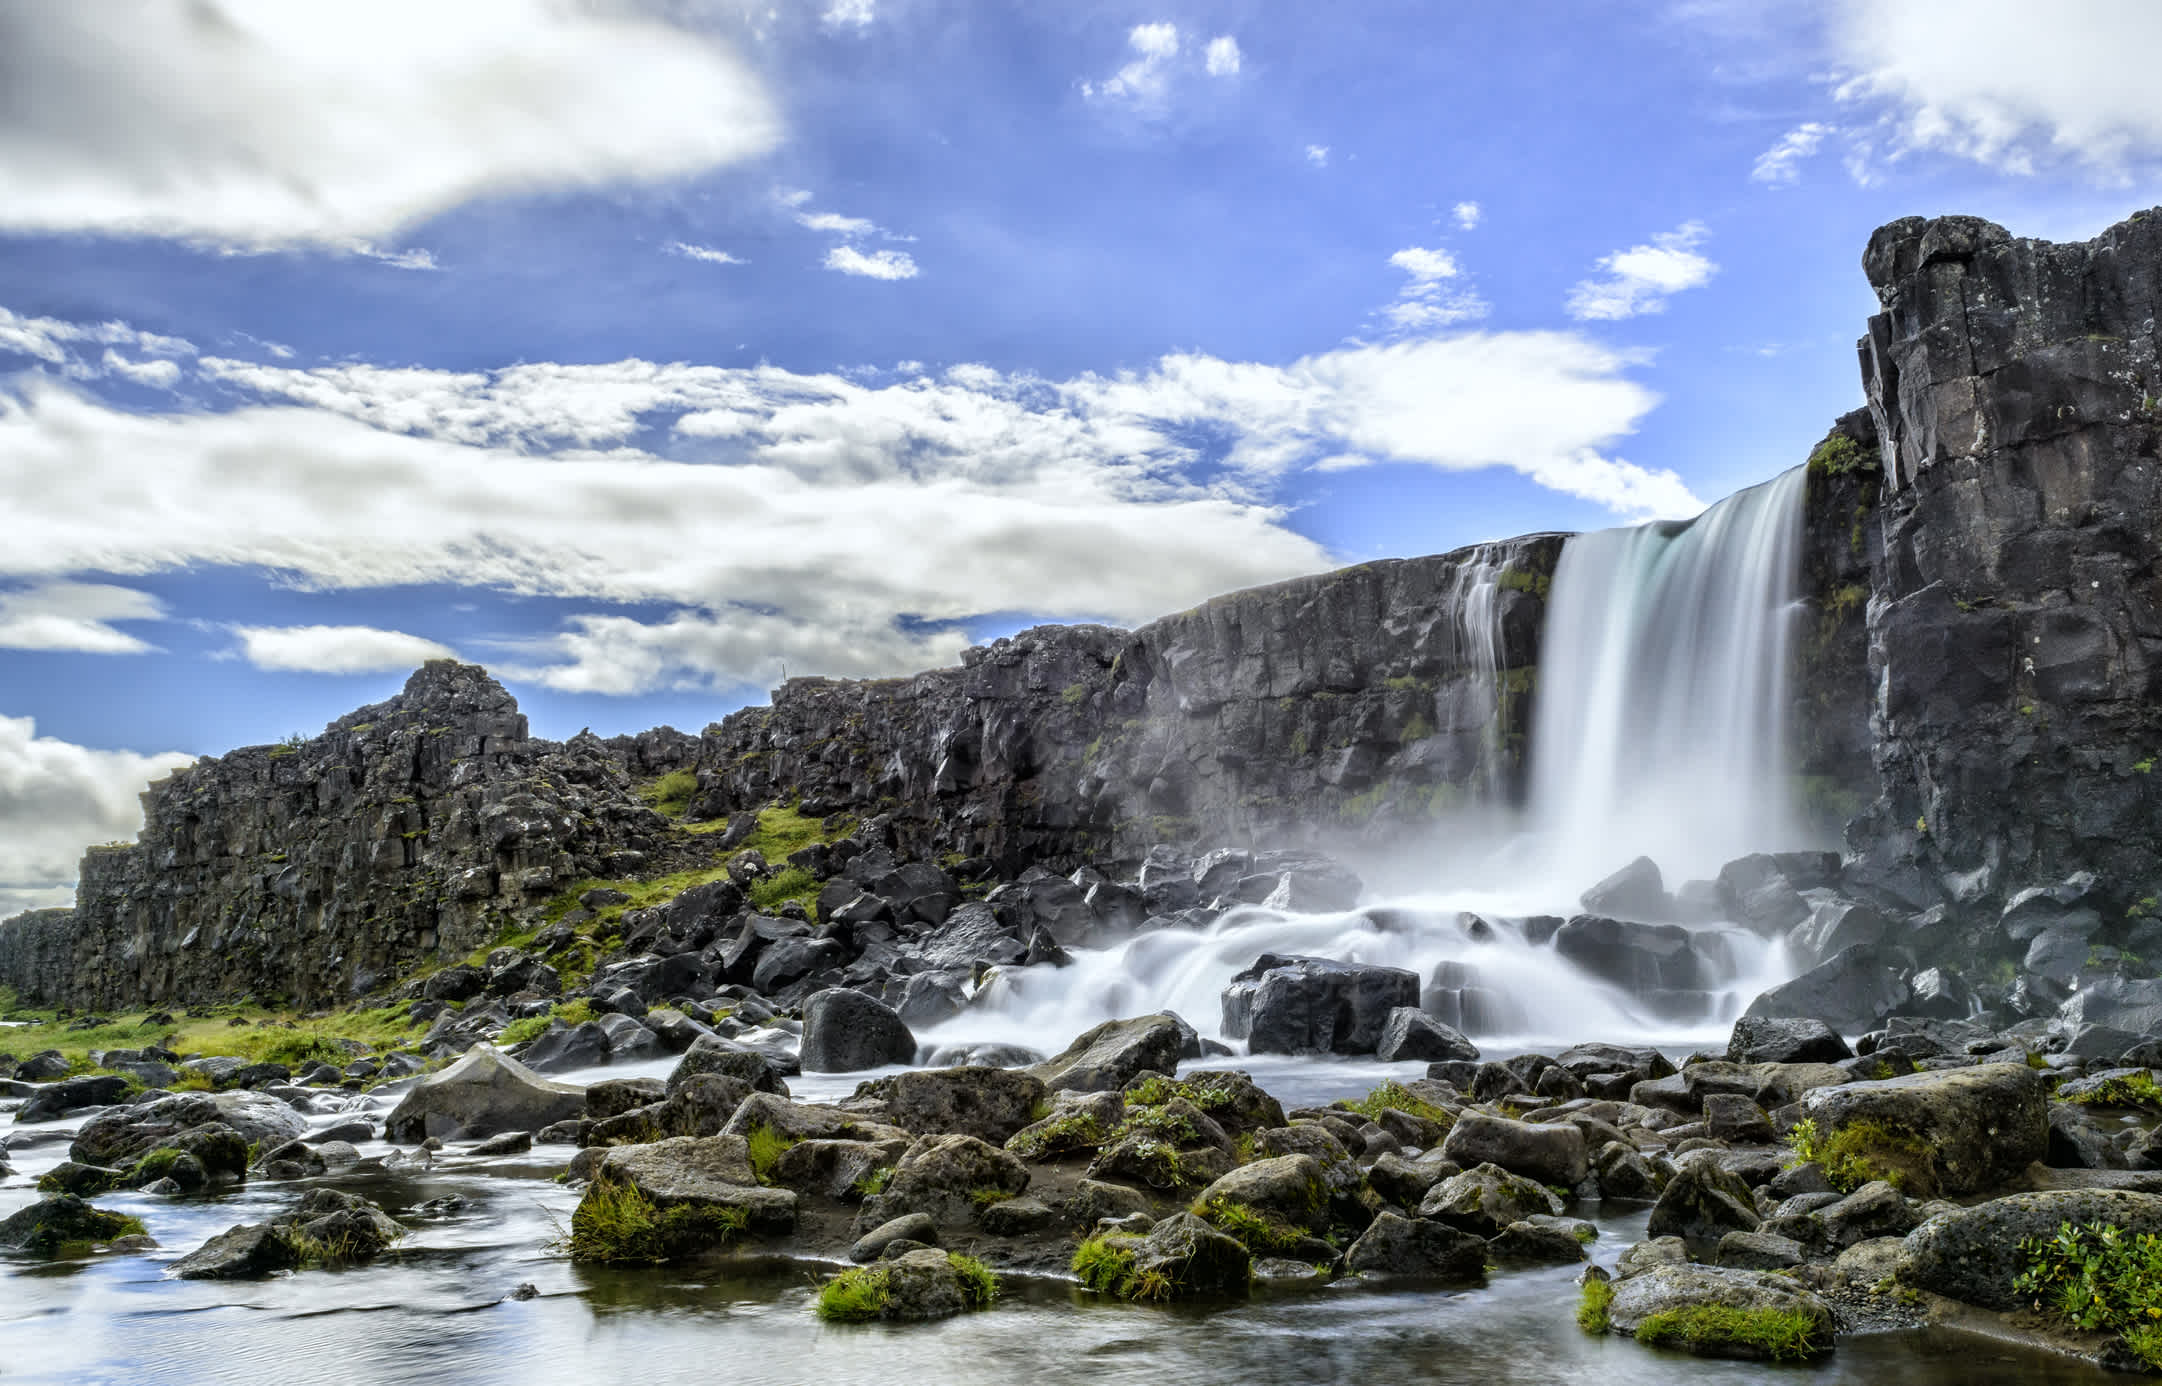 Oxararfoss waterfall in Thingvellir National Park, Iceland.

